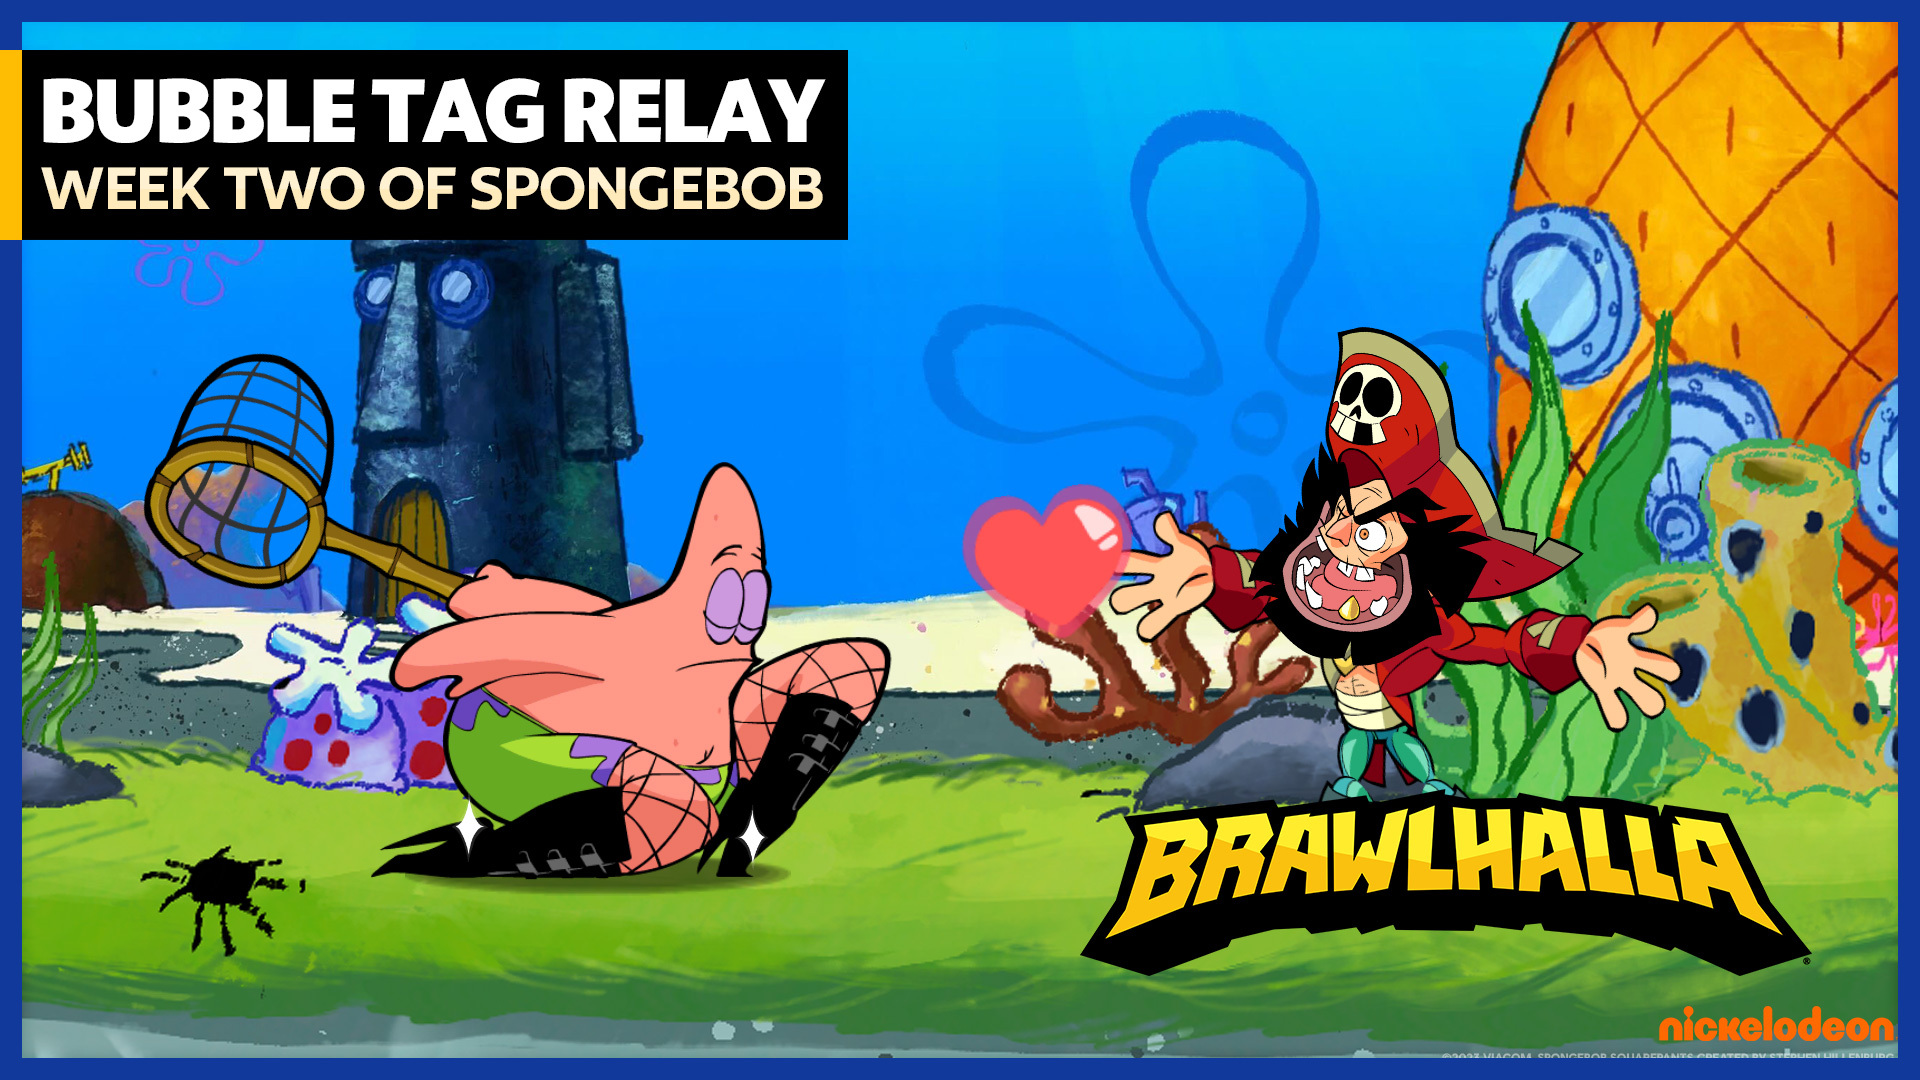 Play Brawlhalla For Free Now! — Brawlhalla